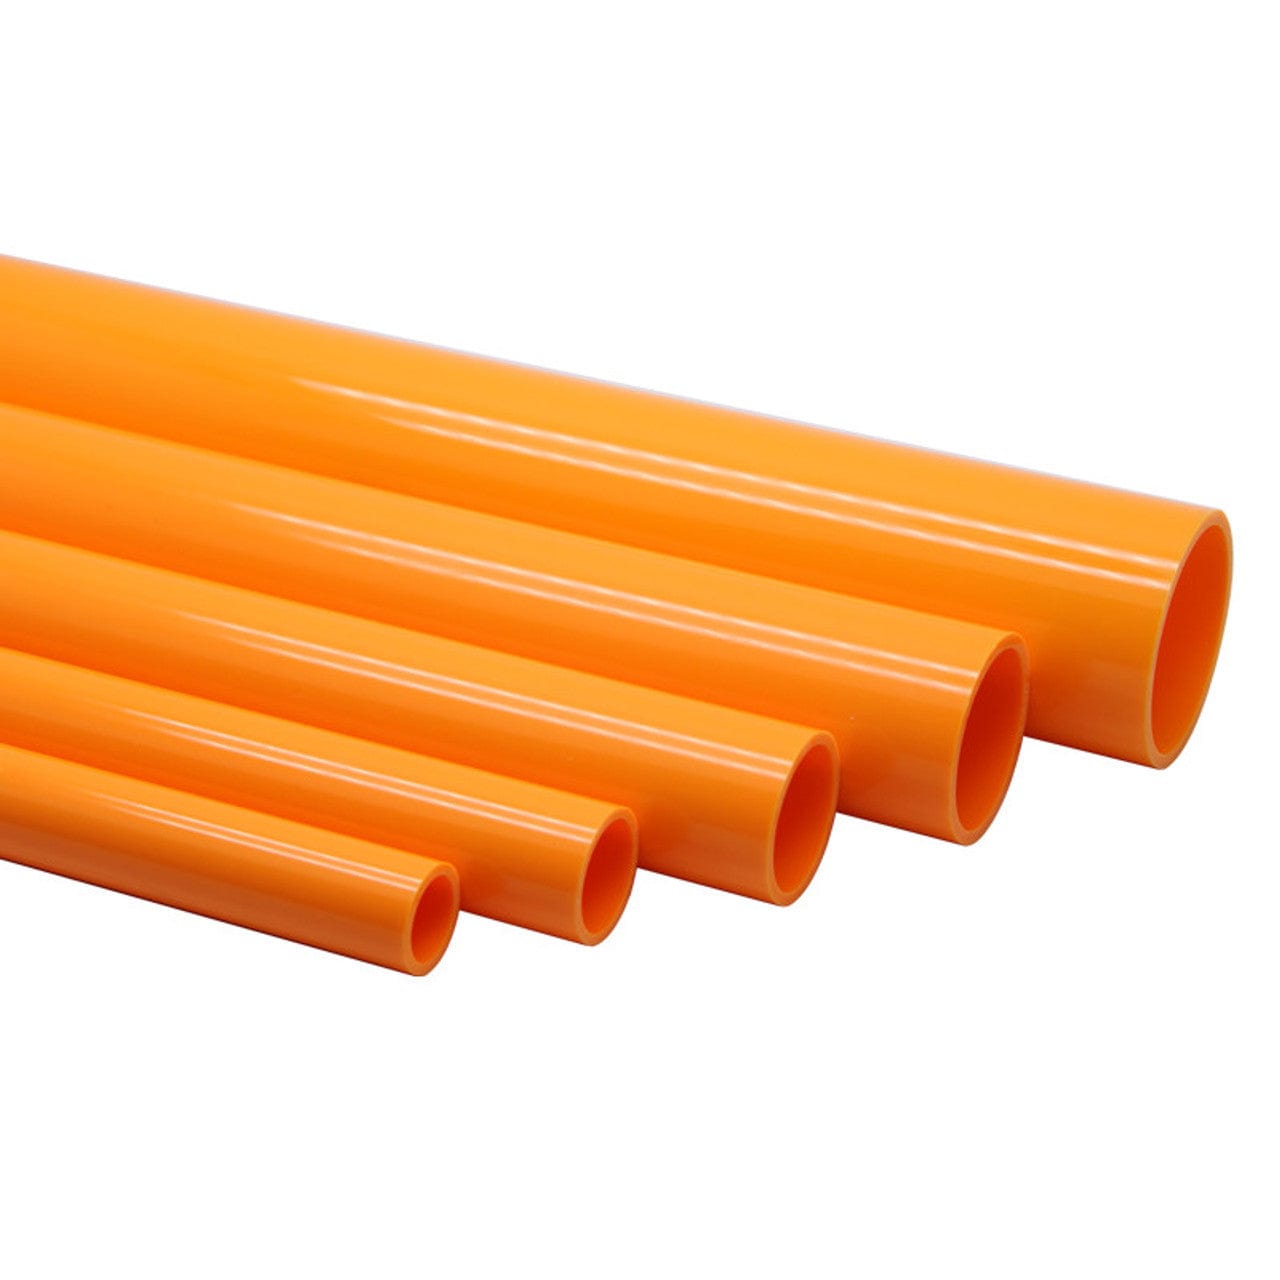 Orange DIN UPVC Pipe 1m Lengths - Sanking